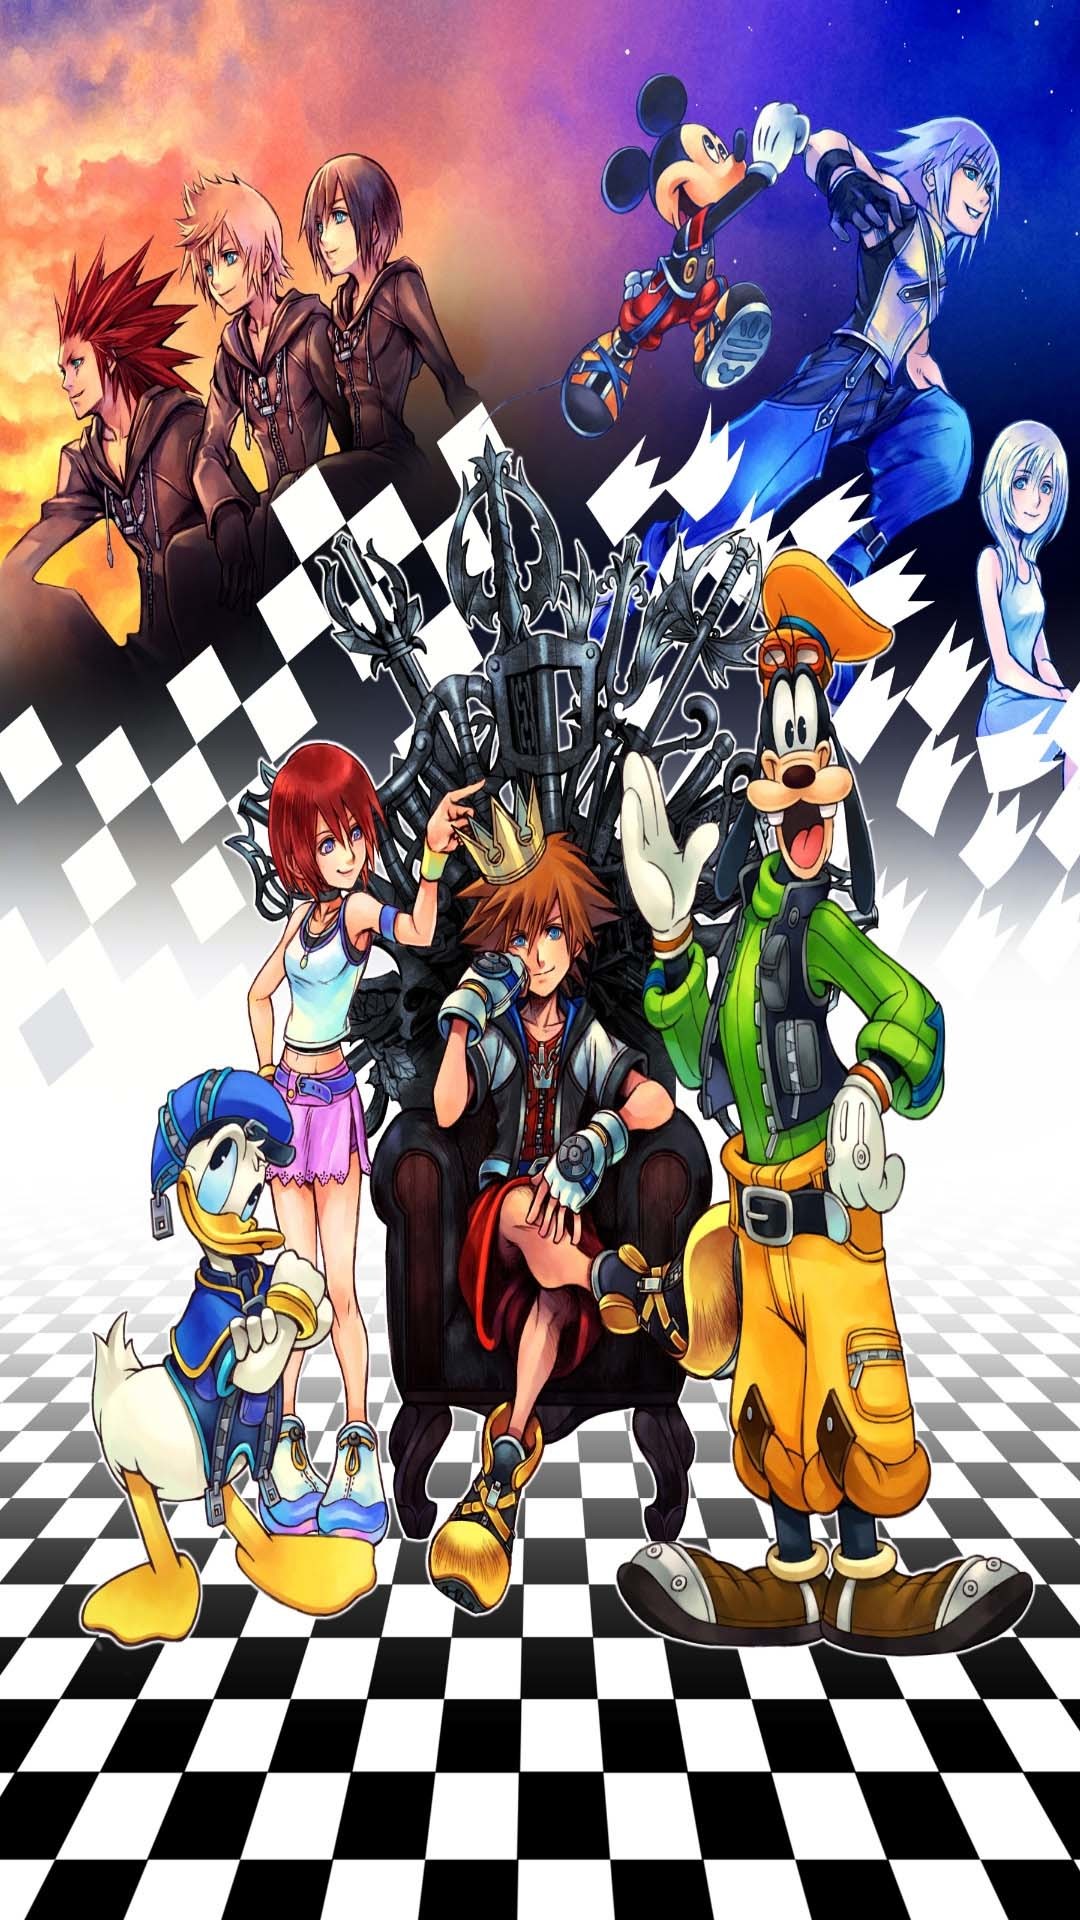 Kingdom Hearts Iphone 11 Wallpaper